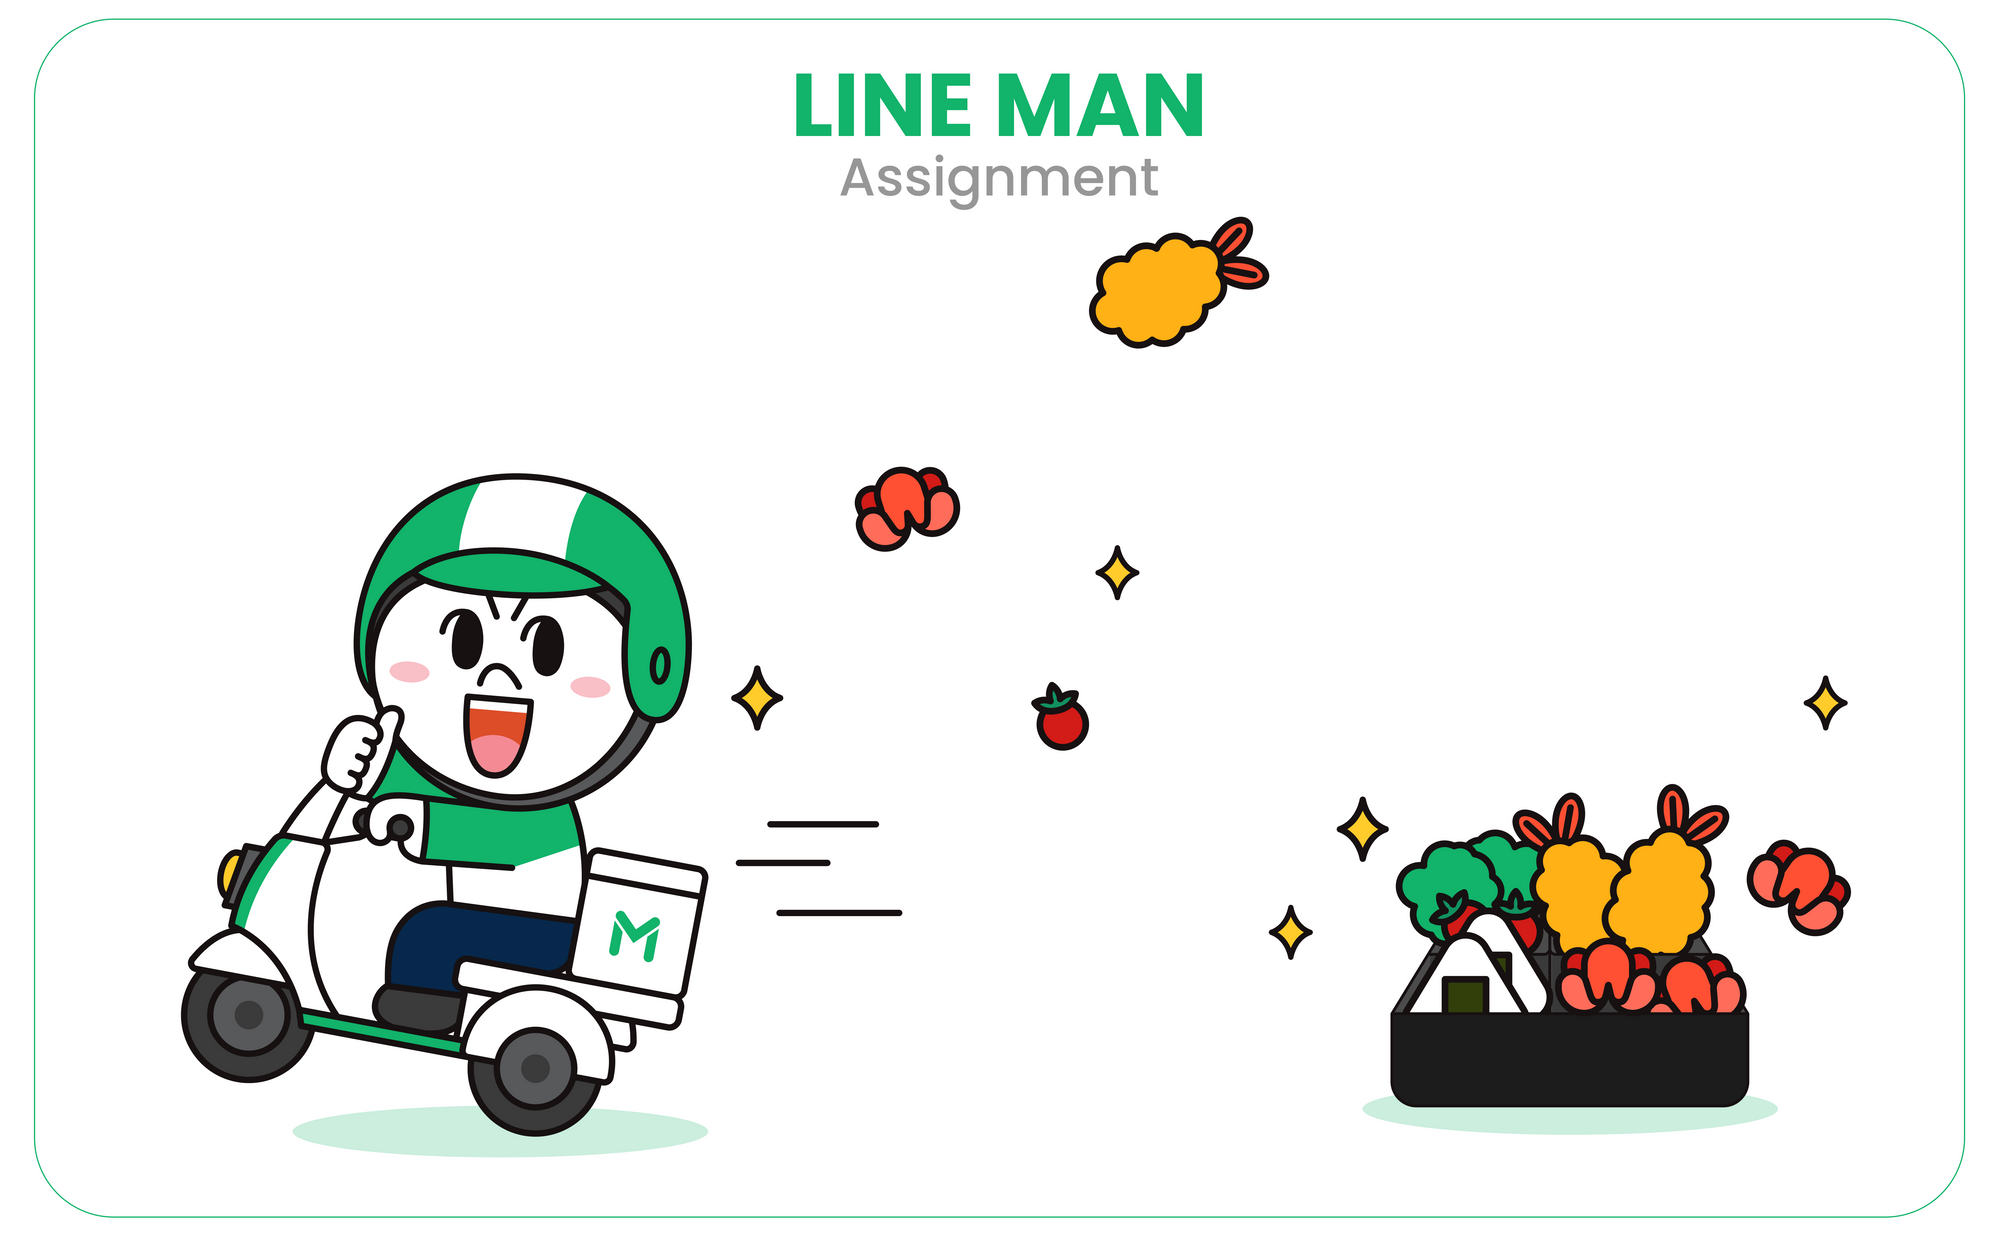 Line man